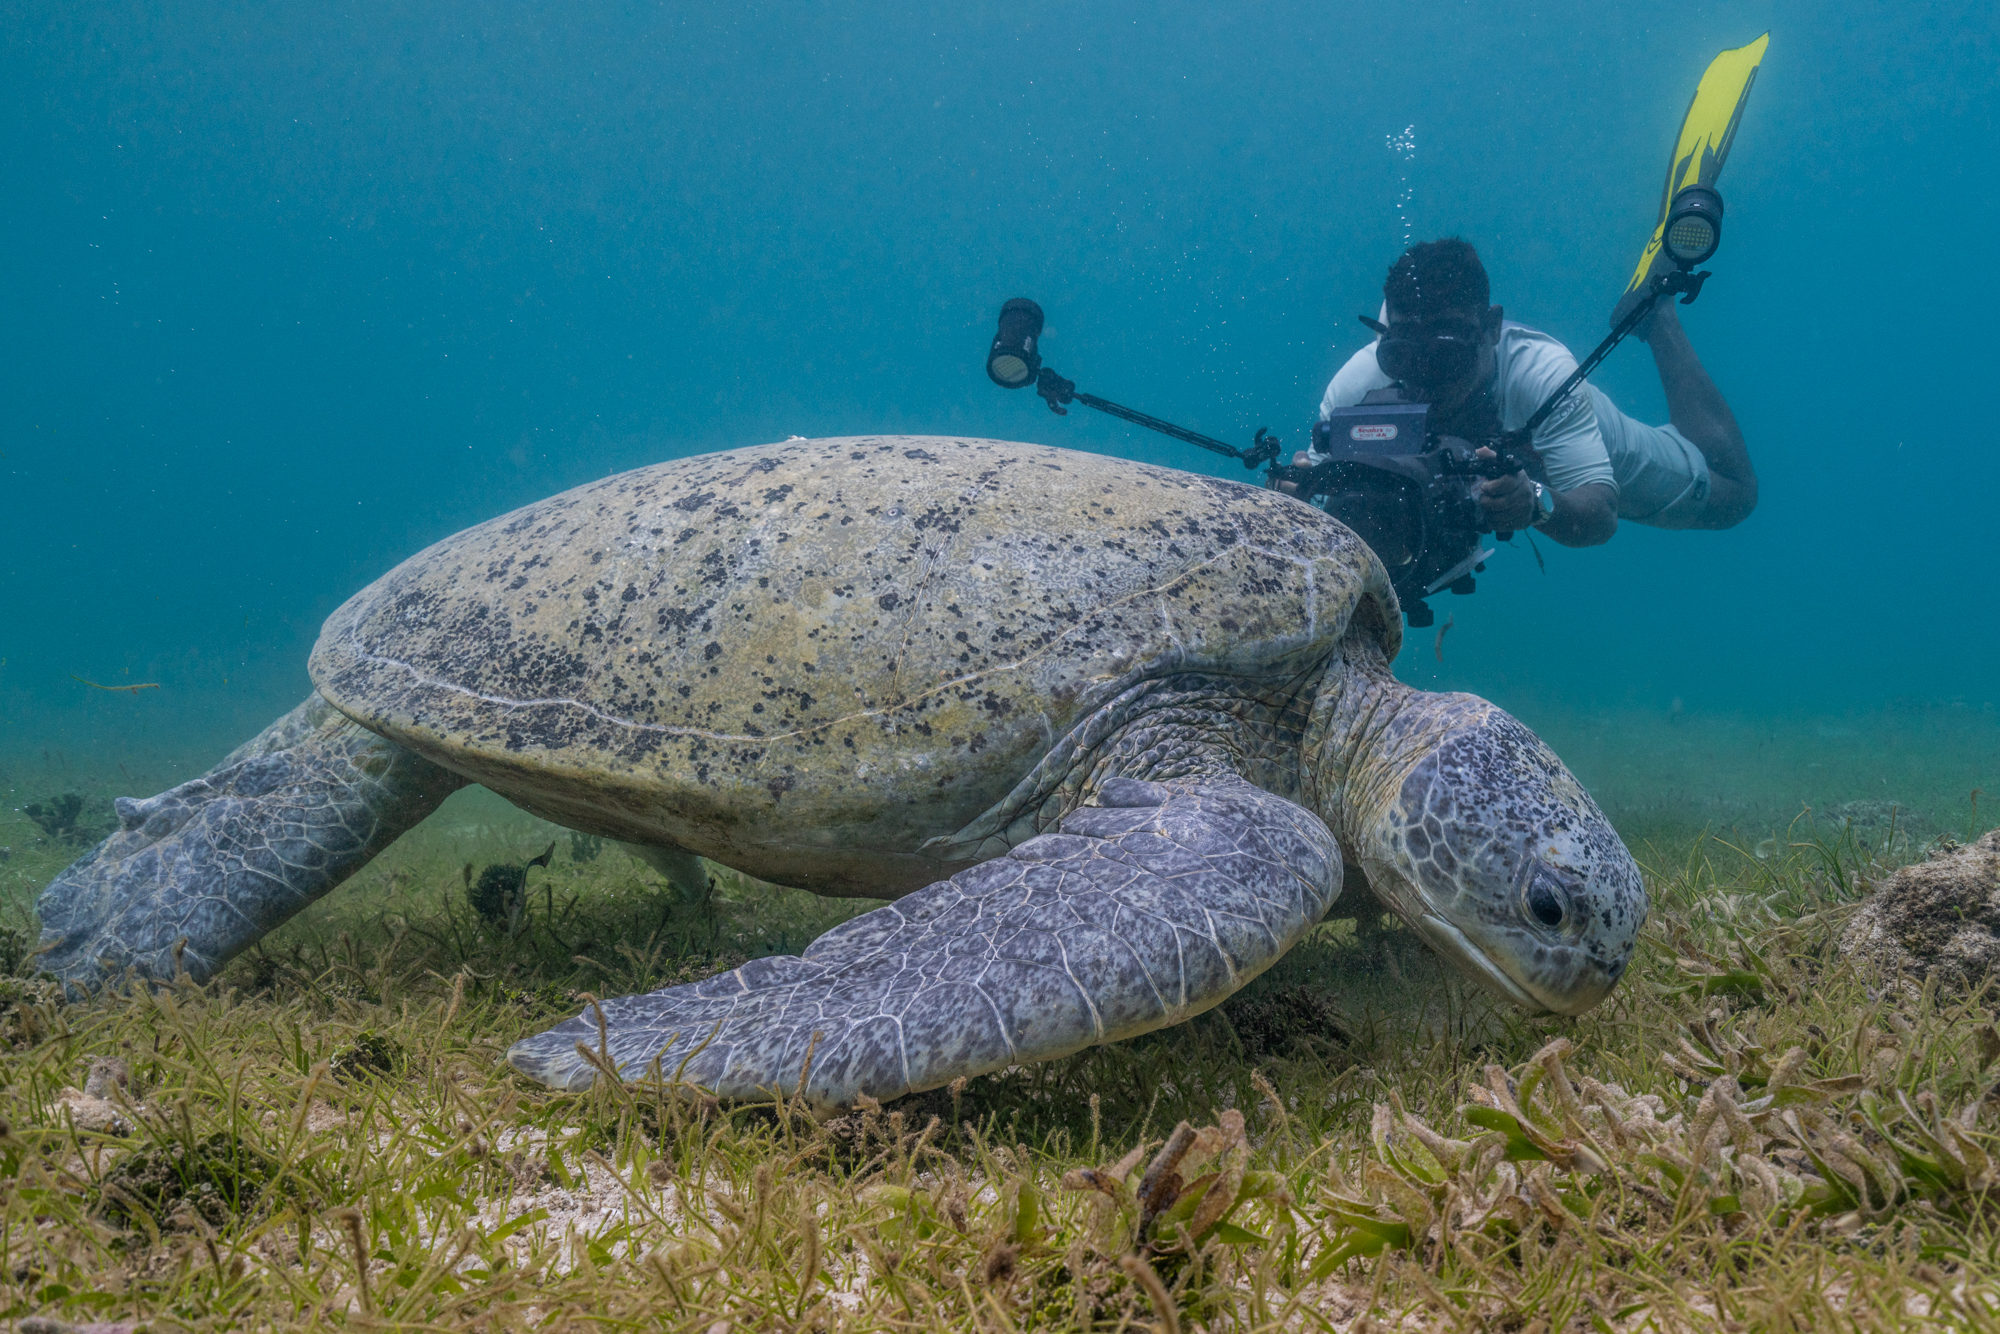 padi torchbearer michele strogoff goff filming a green turtle underwater in Madagascar